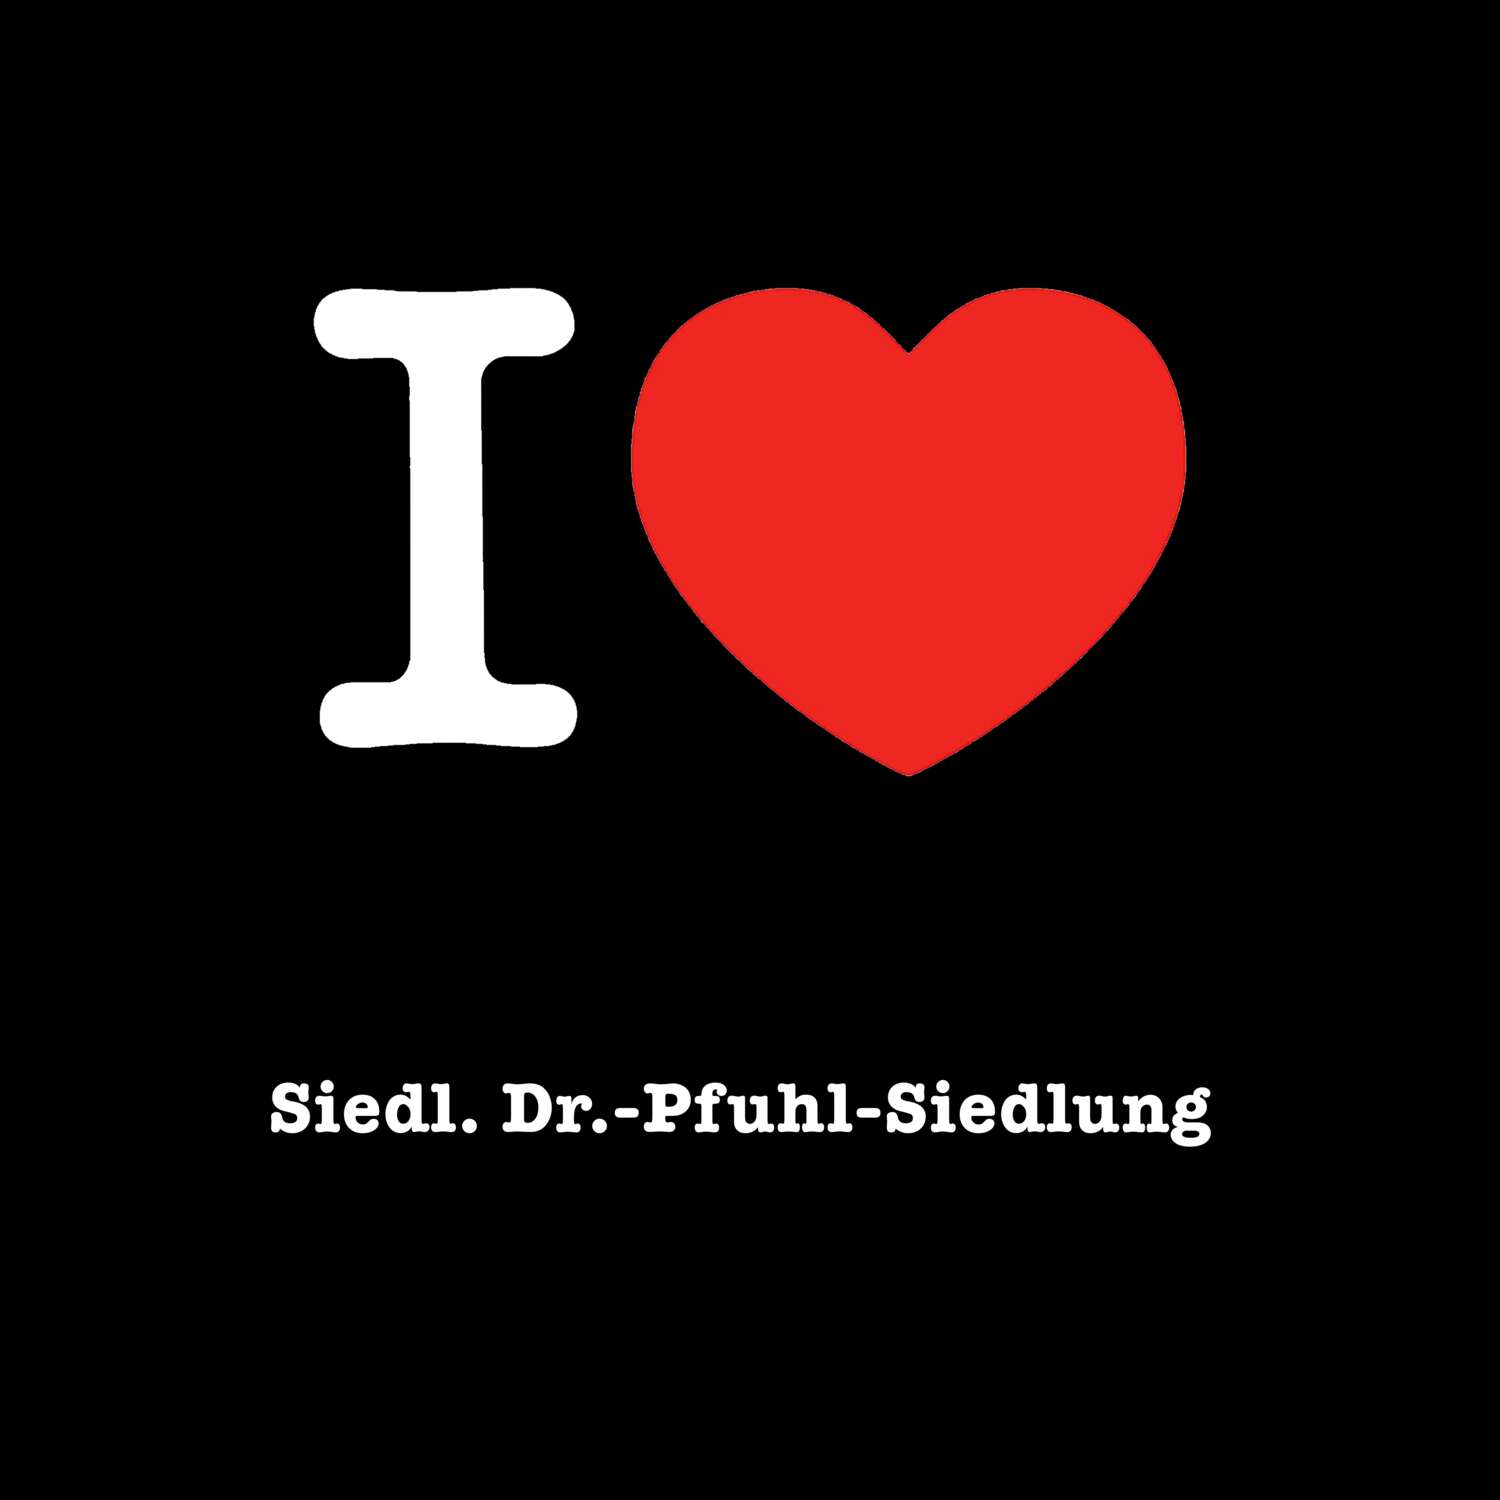 Siedl. Dr.-Pfuhl-Siedlung T-Shirt »I love«